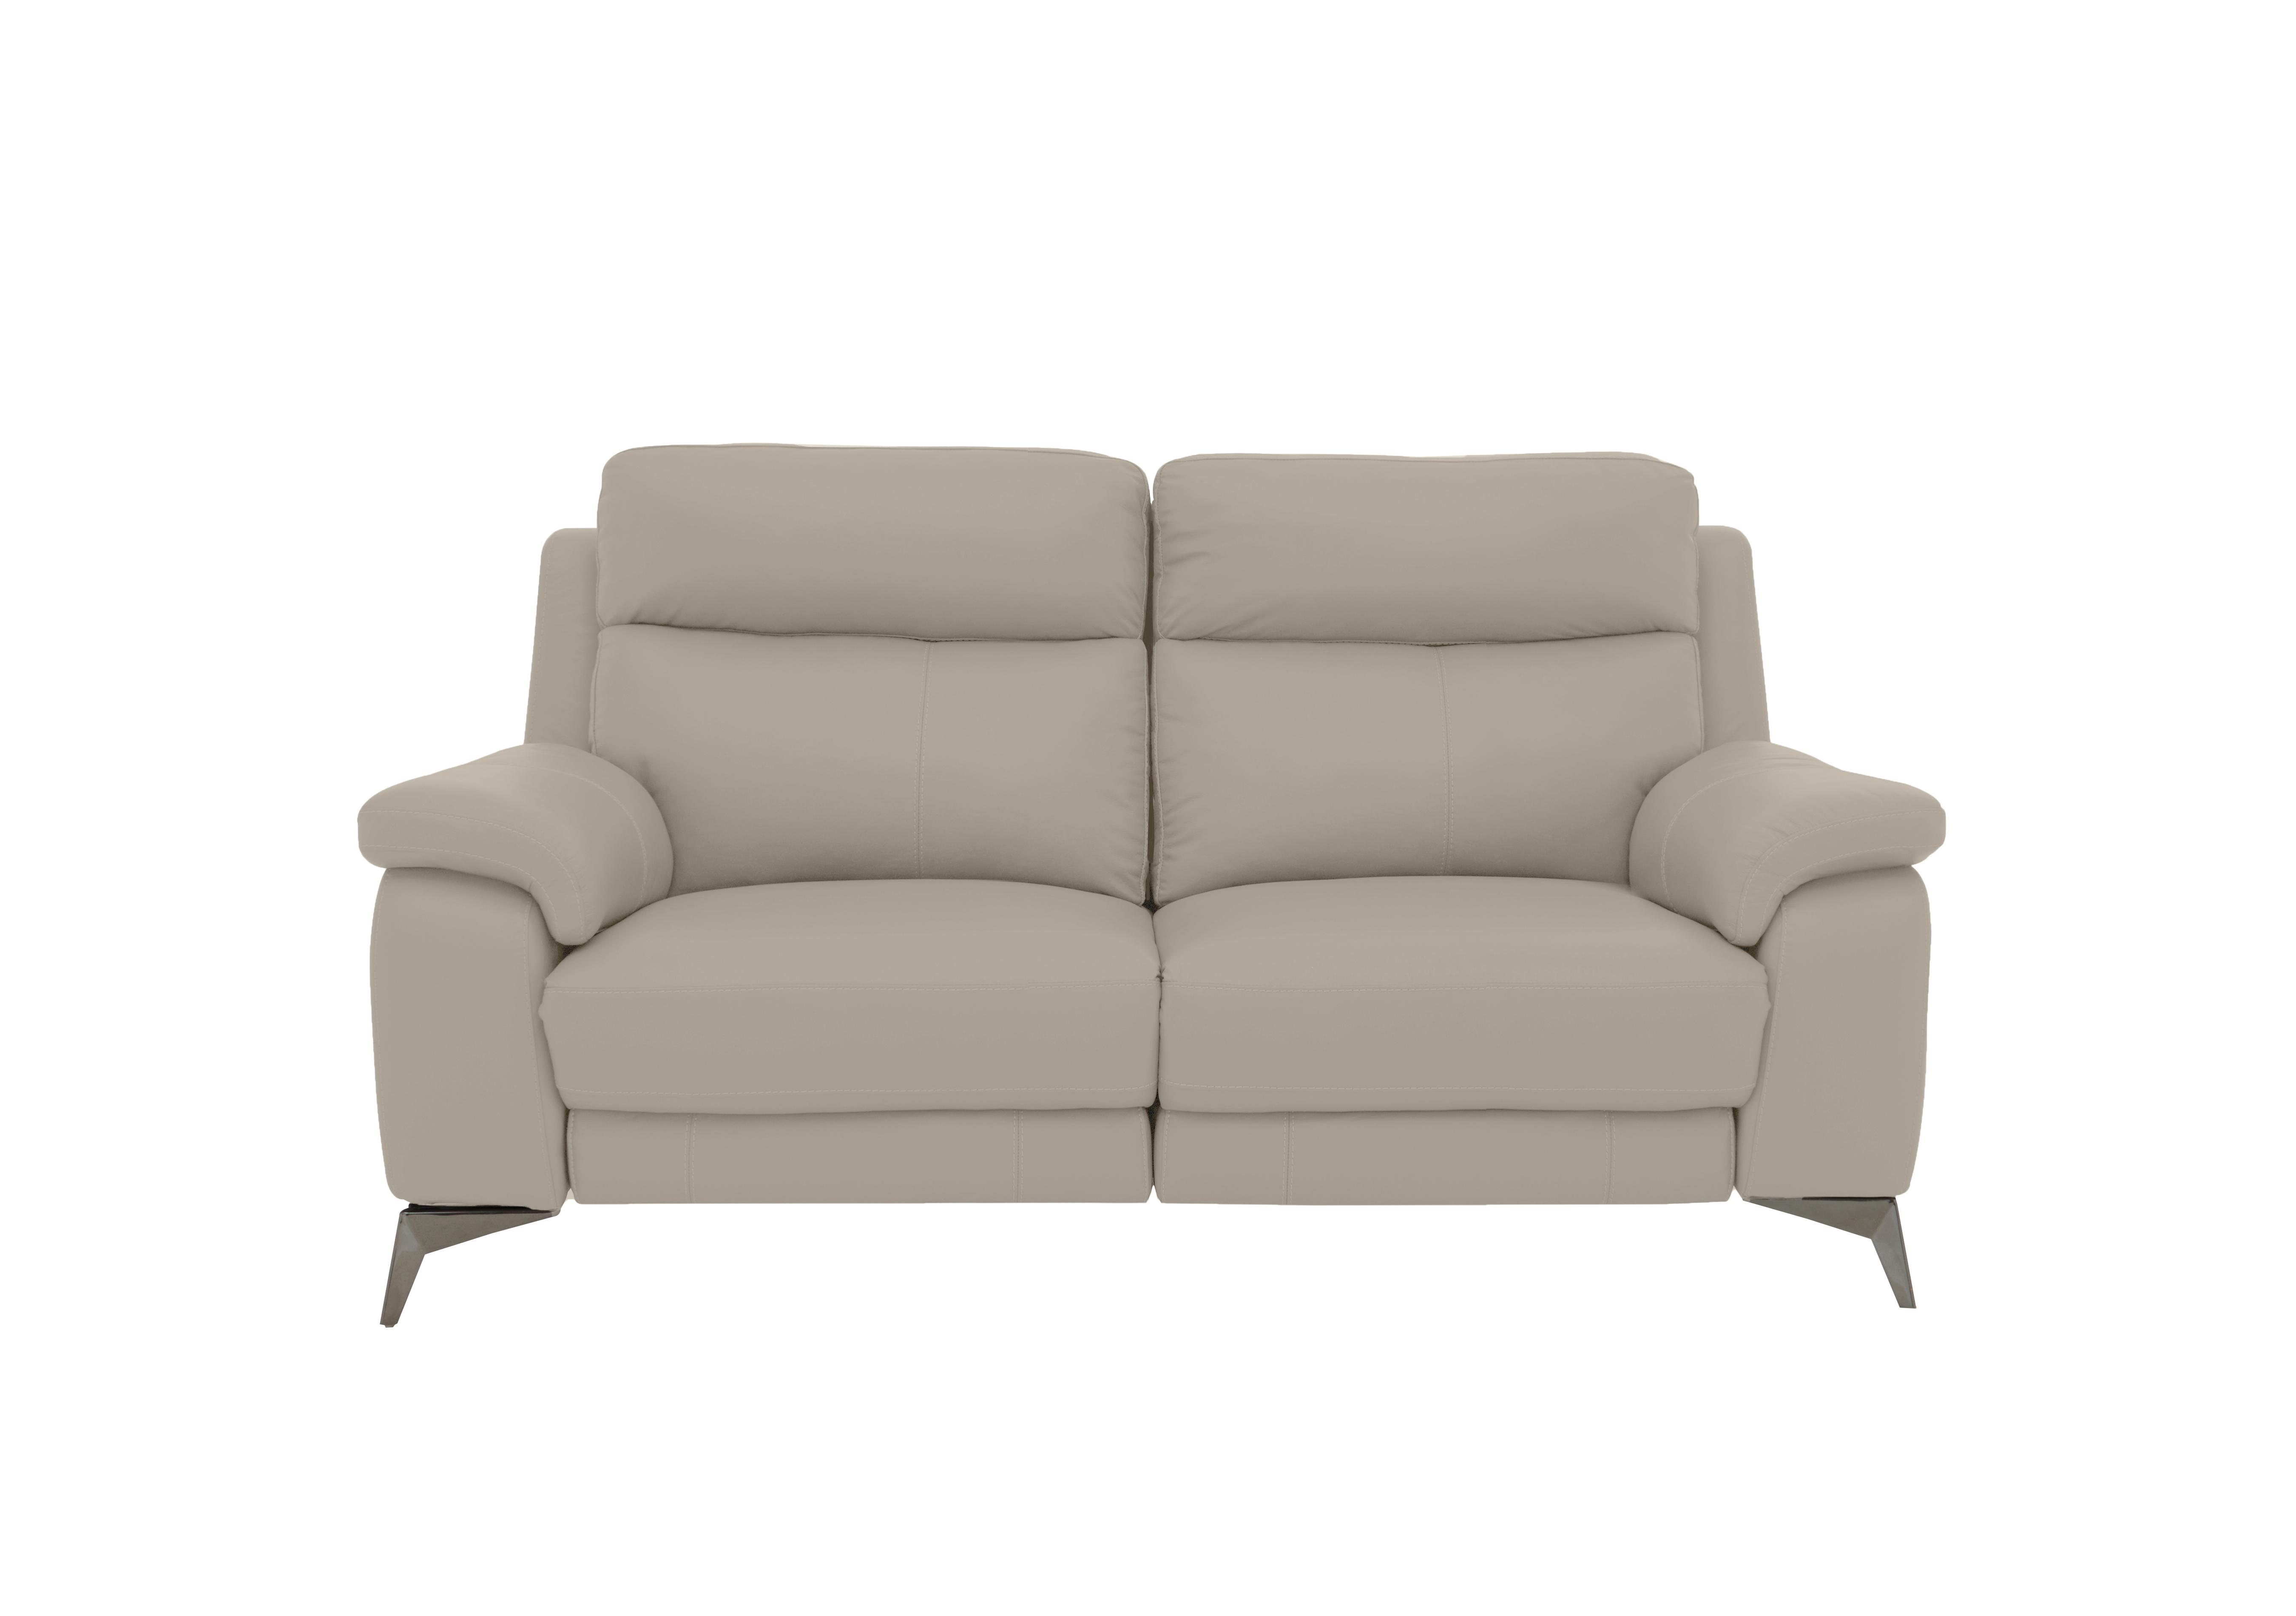 Missouri 2 Seater Leather Sofa in Bv-946b Silver Grey on Furniture Village